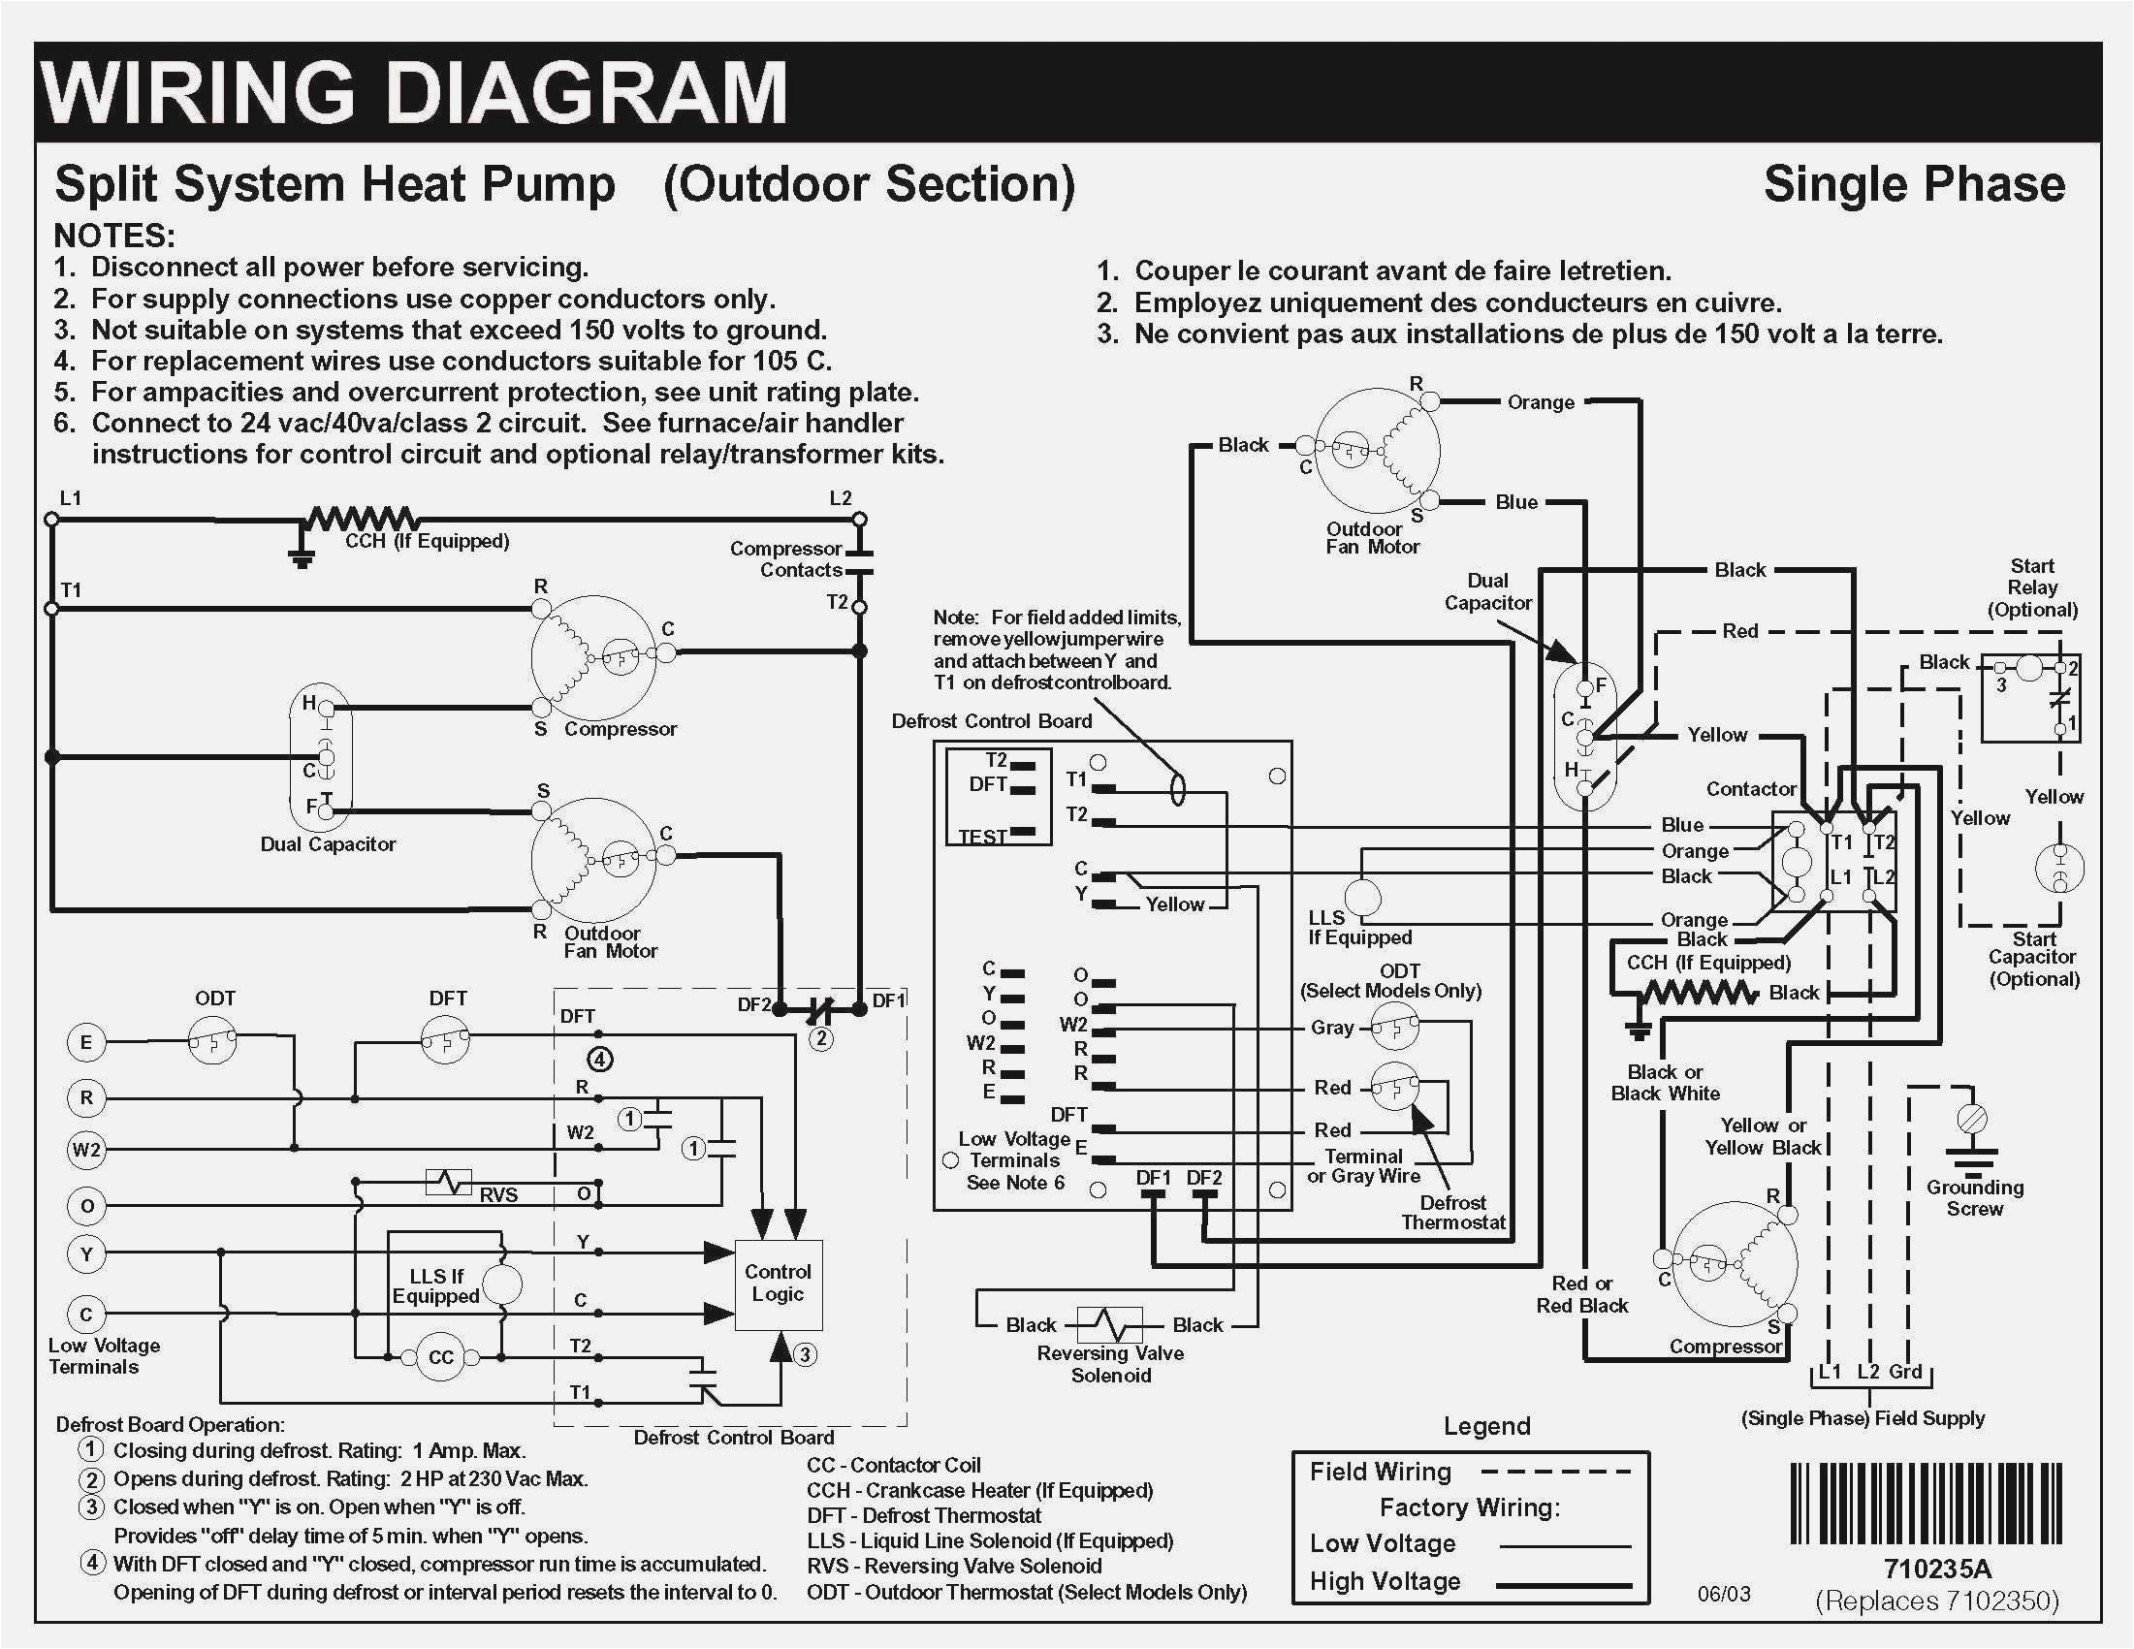 wiring diagram for tempstar heat pump electrical schematic wiring tempstar heat pump wiring diagram tempstar heat pump wiring schematic